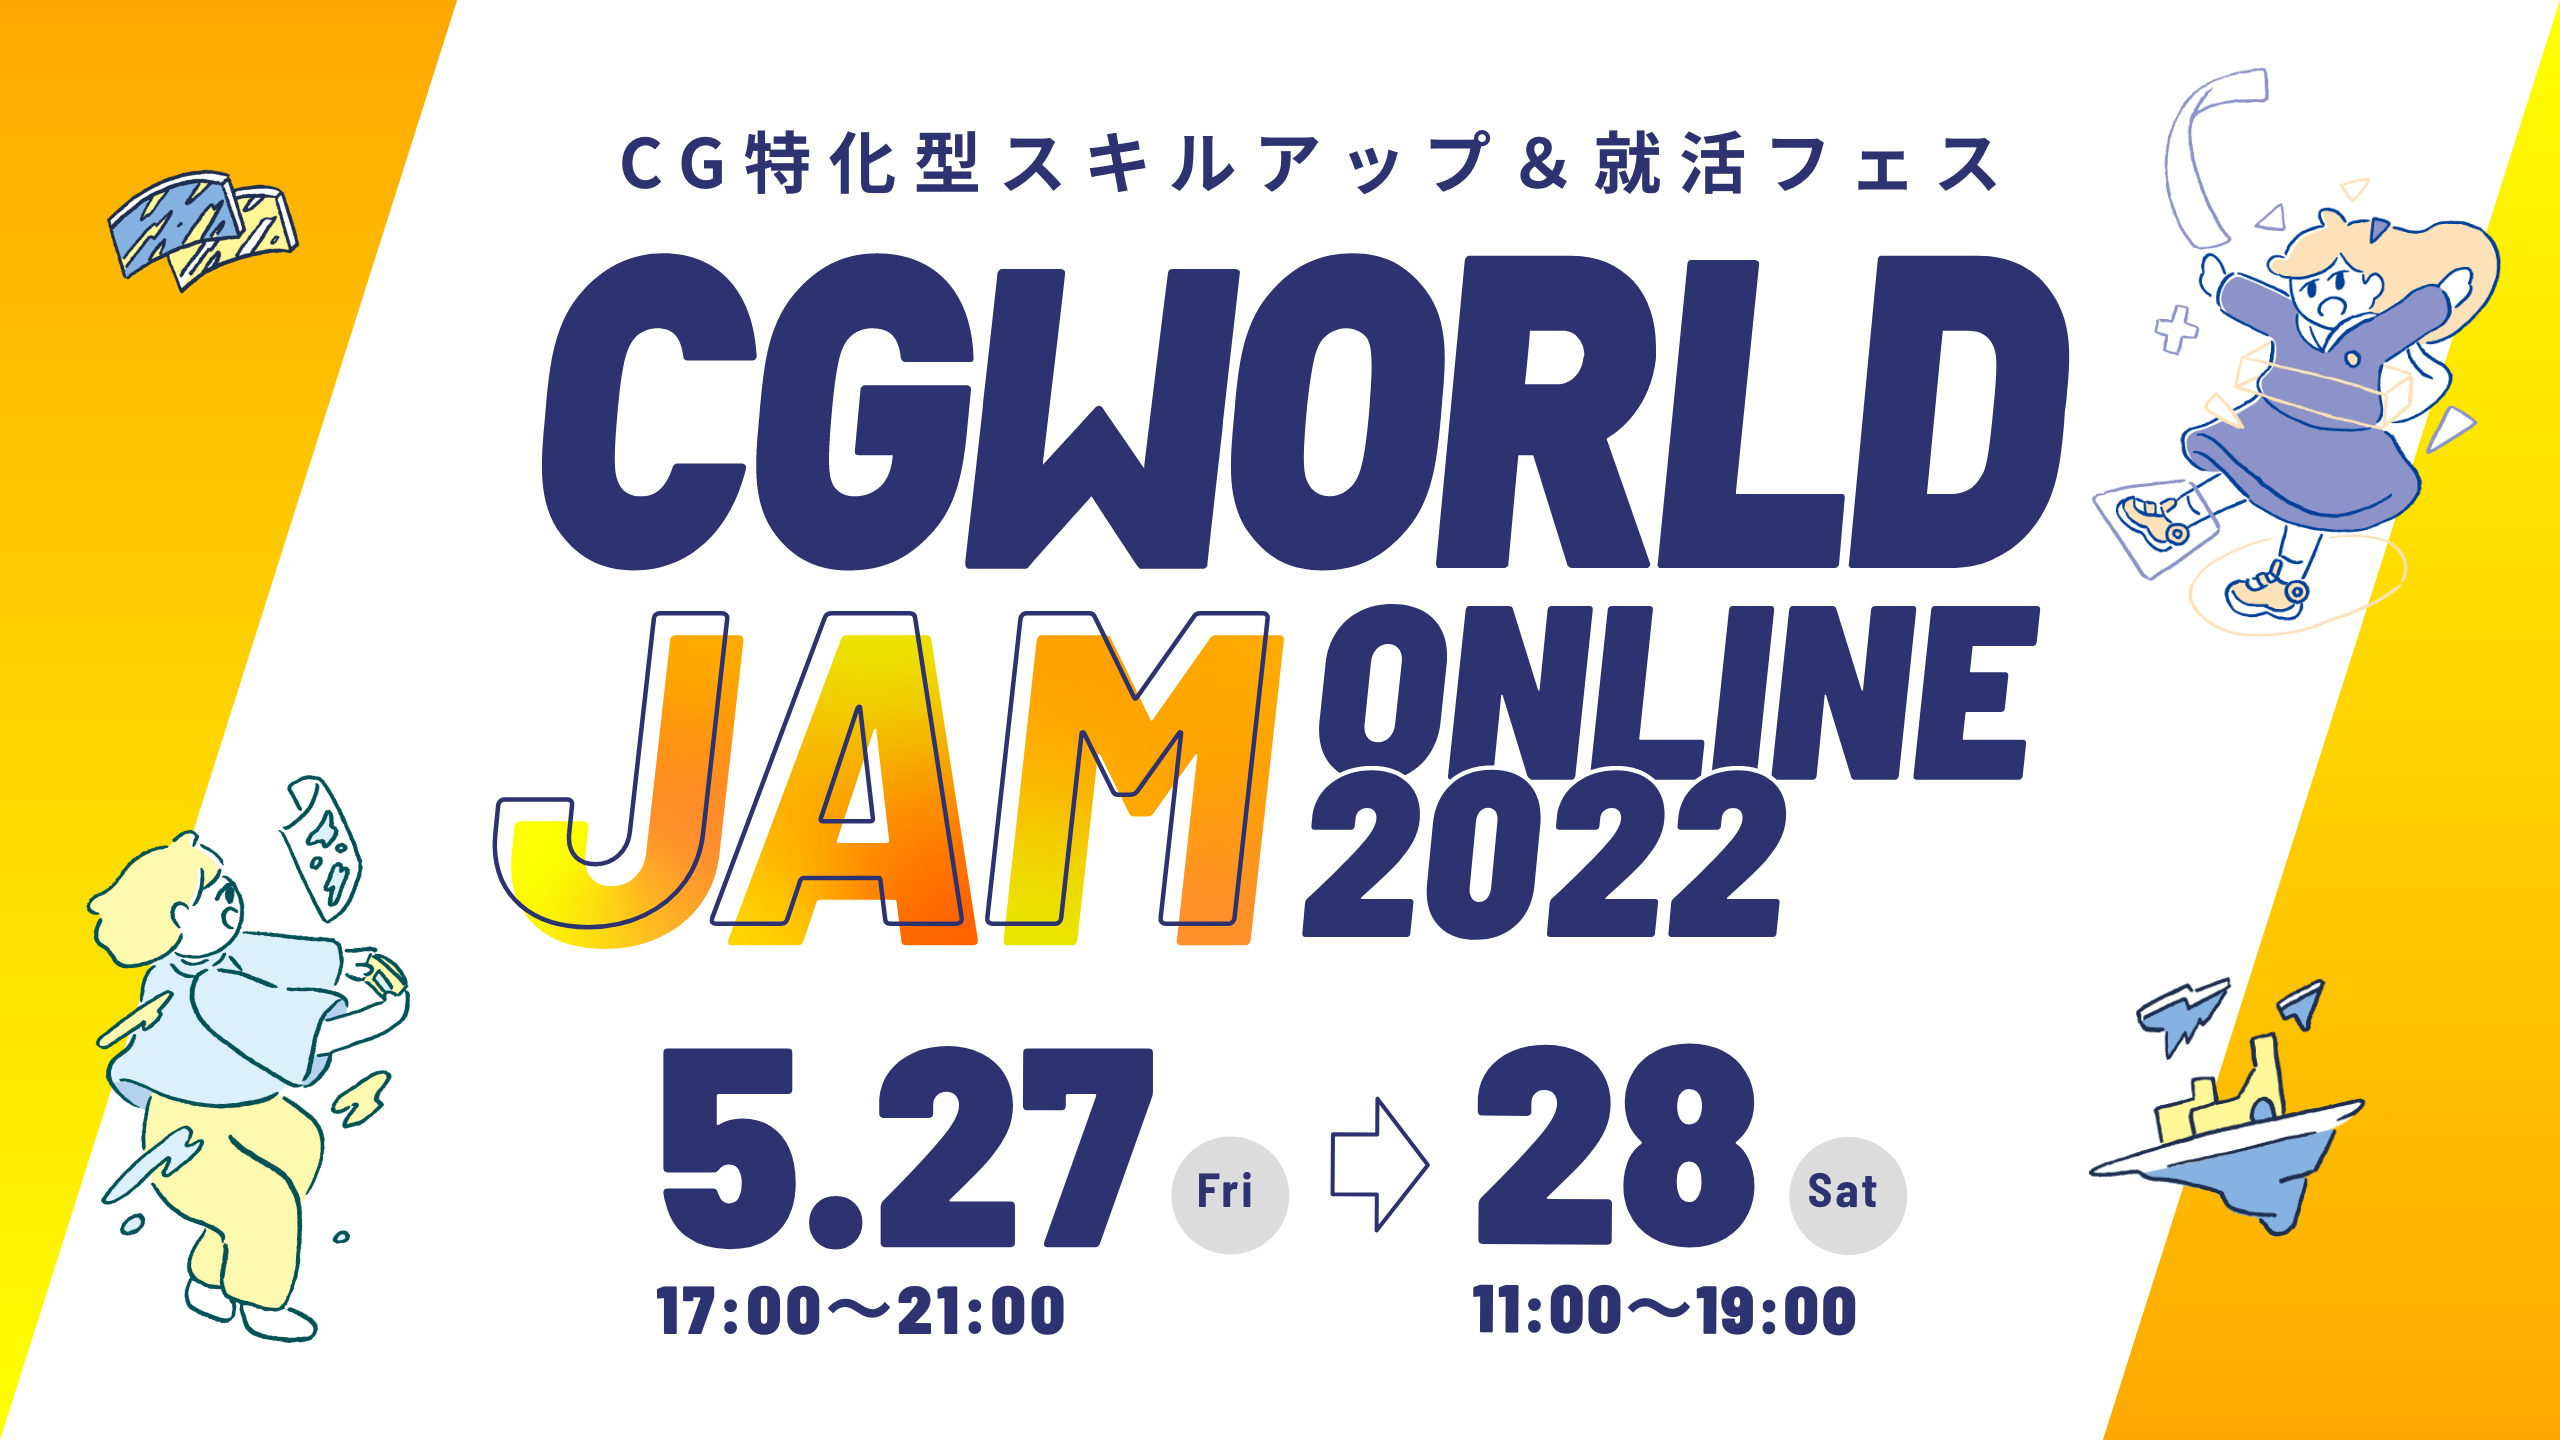 CGWORLD JAM online 2022